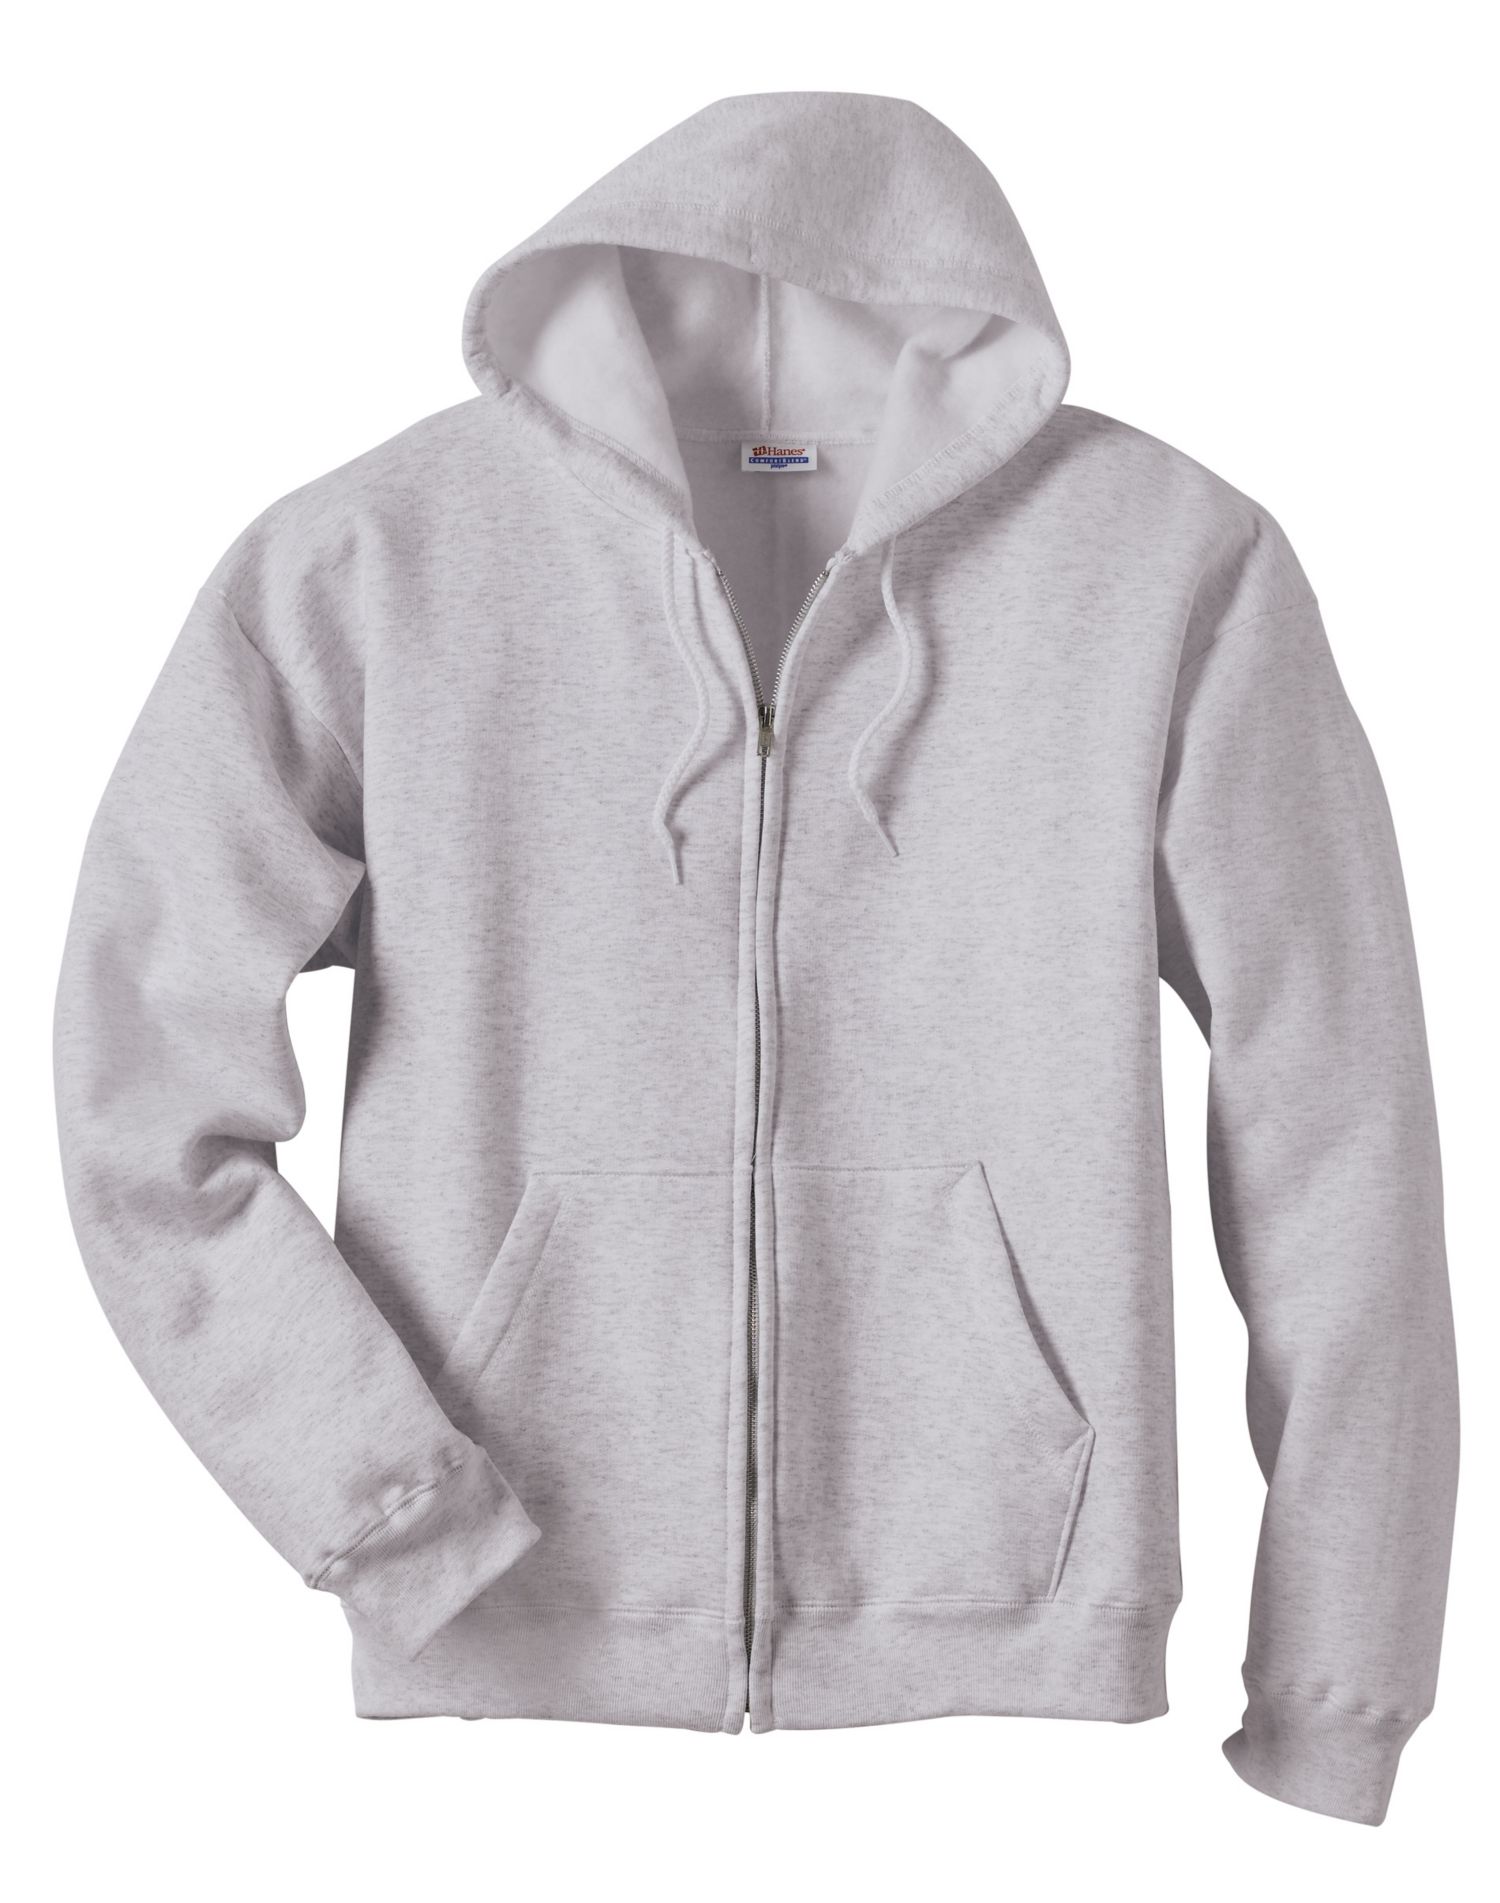 Hanes - Ecosmart Full-Zip Hooded Sweatshirt - P180 - Light Steel - Size: 2XL - image 2 of 4